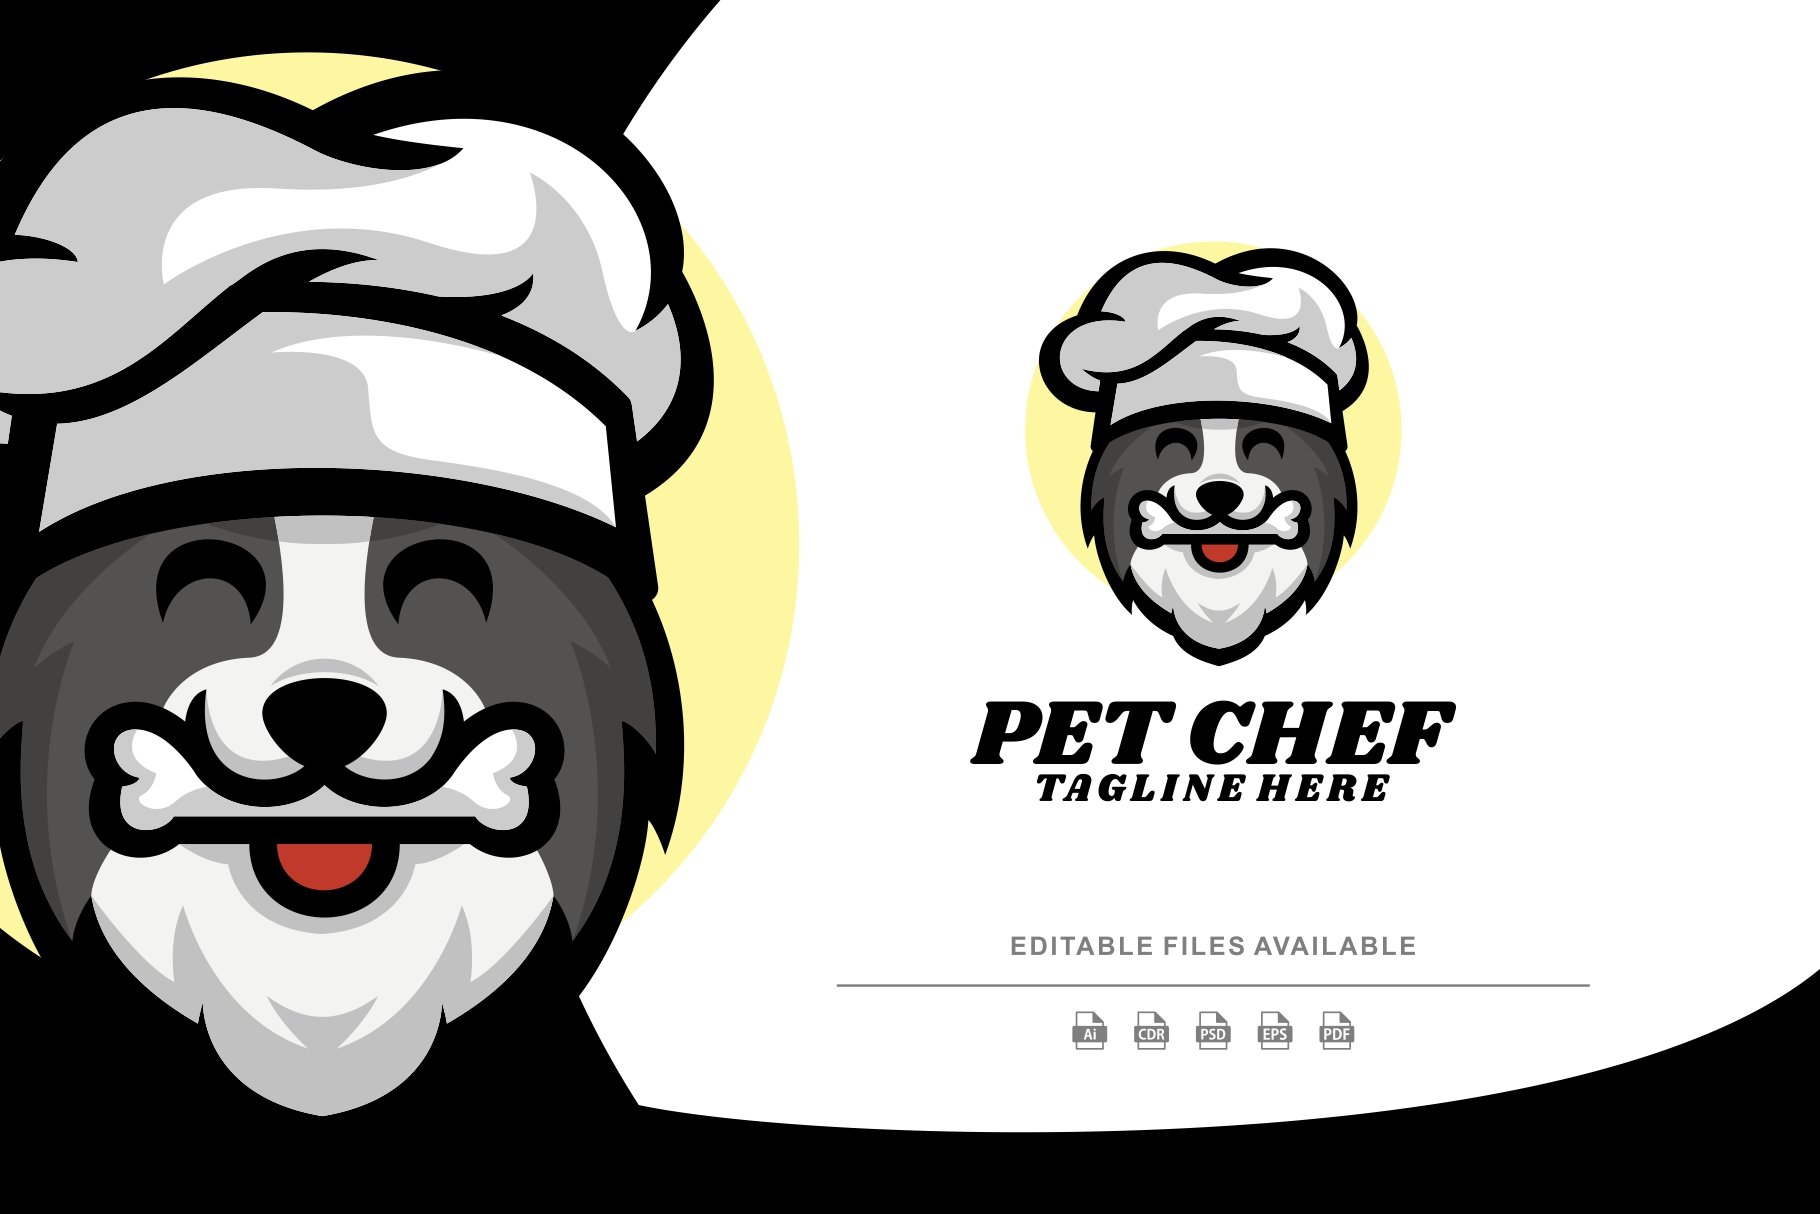 Pet Chef Mascot Cartoon Logo cover image.